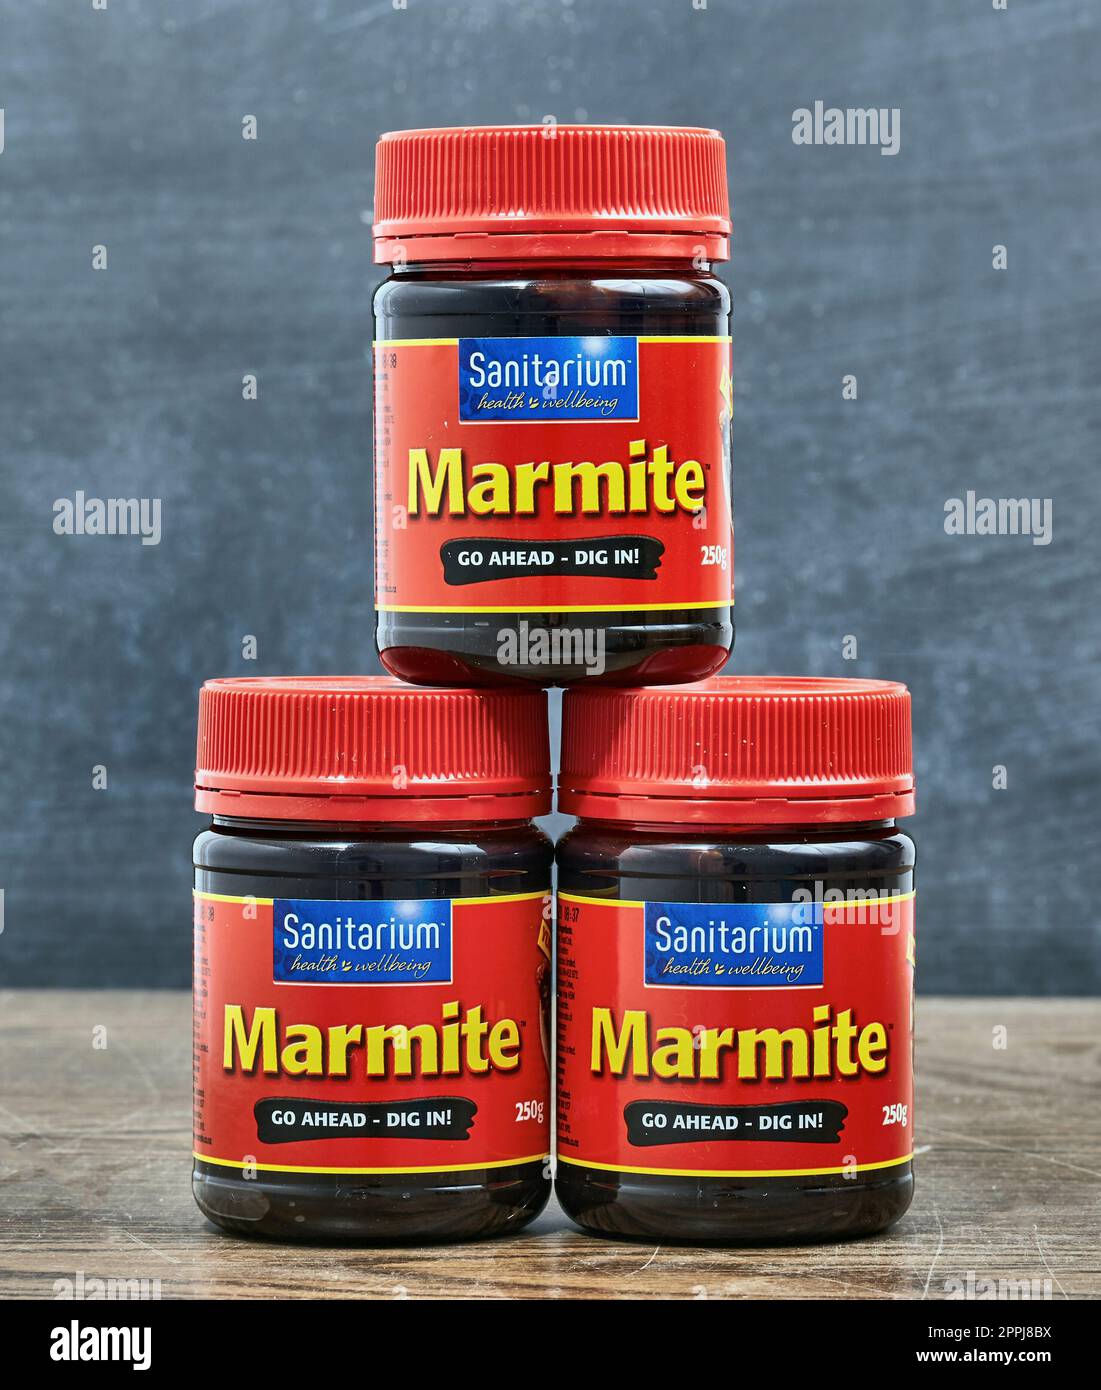 Jar of Marmite from New Zealand Stock Photo